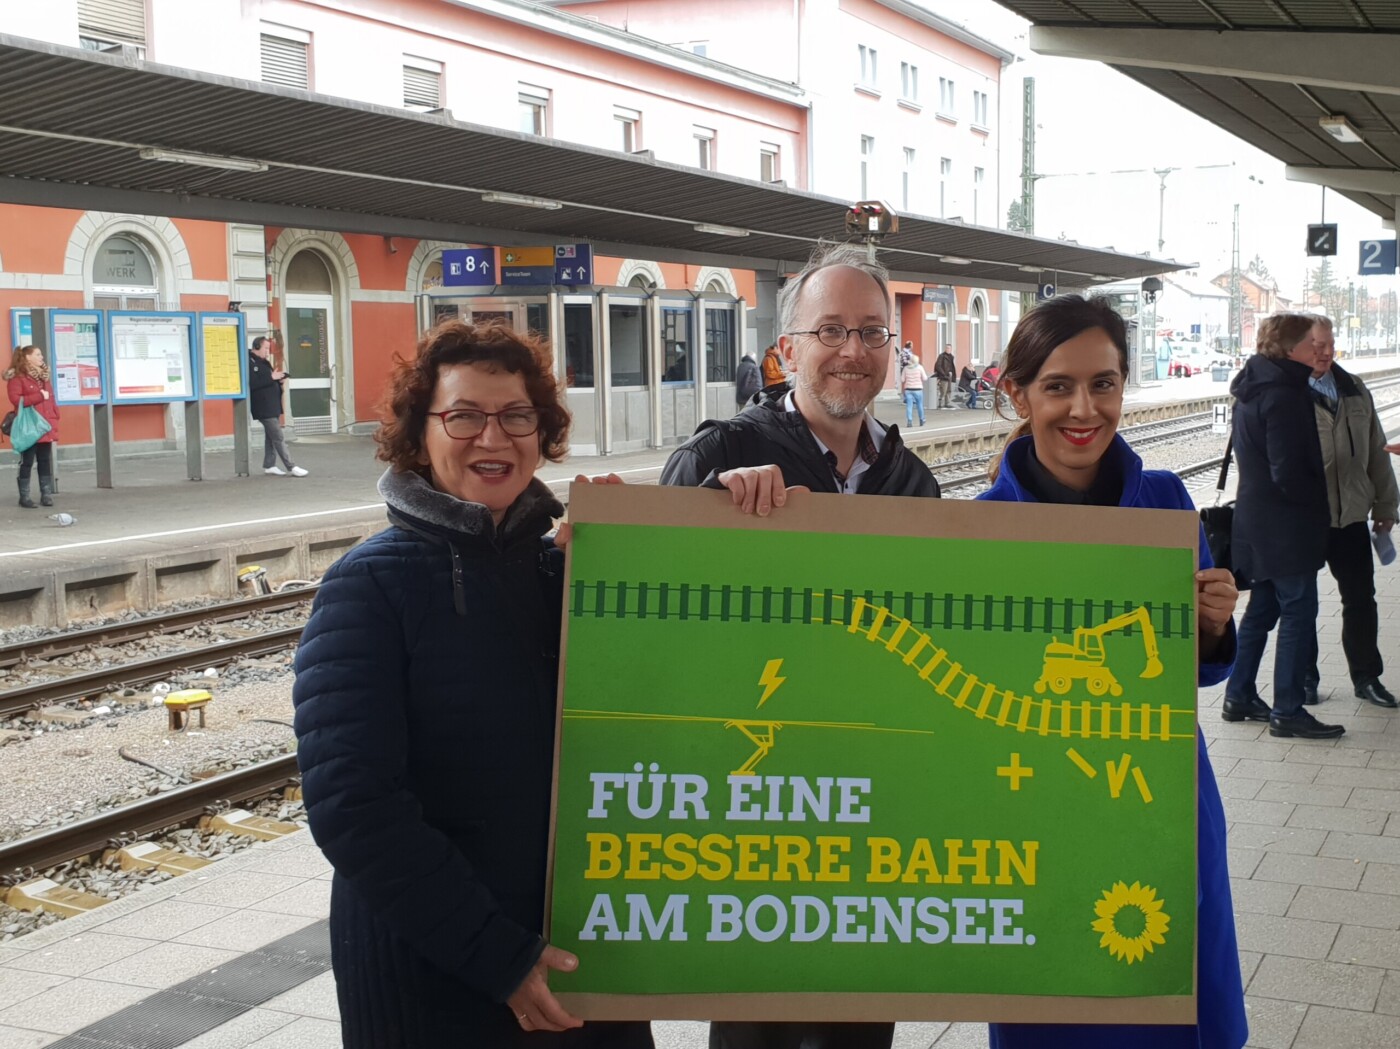 Großes Interesse am grünen Bodensee-Bahnforum